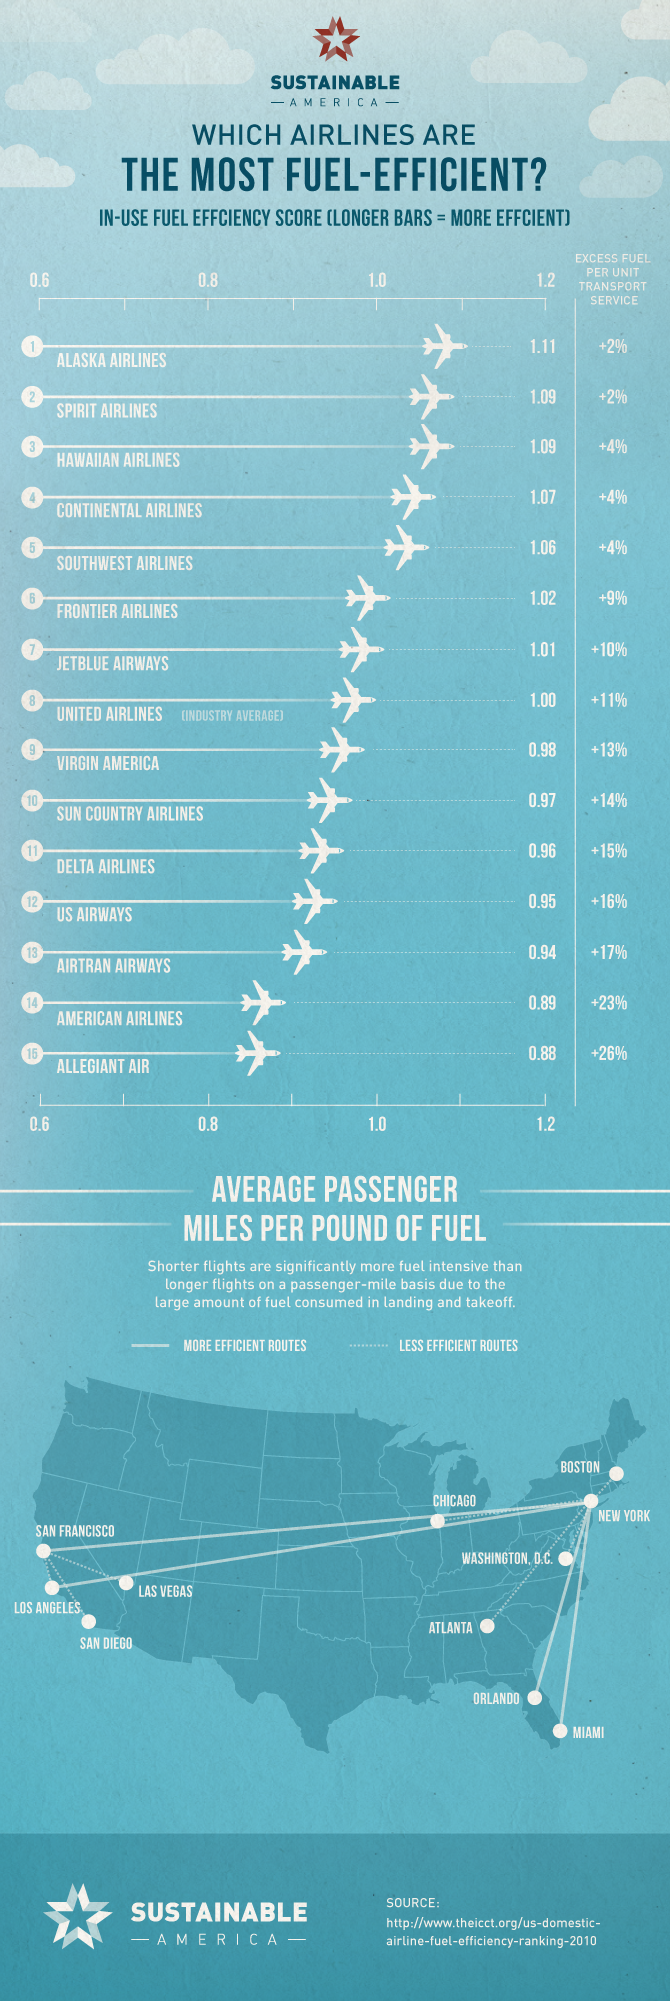 Airline_Fuel_Efficiency_Ranking